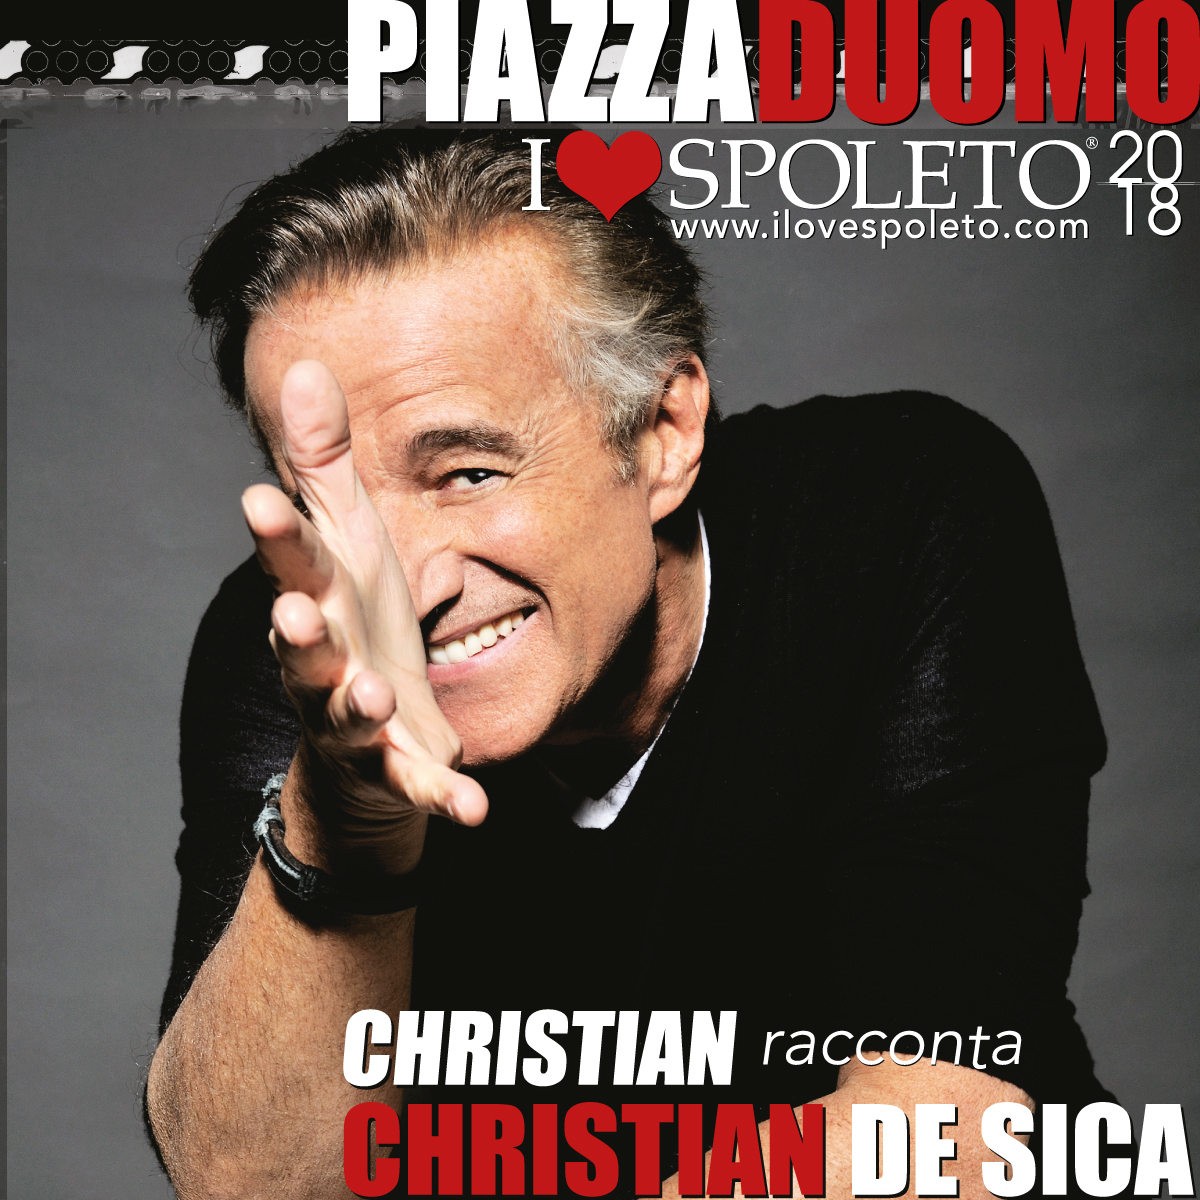 Christian Racconta Christian De Sica 2018